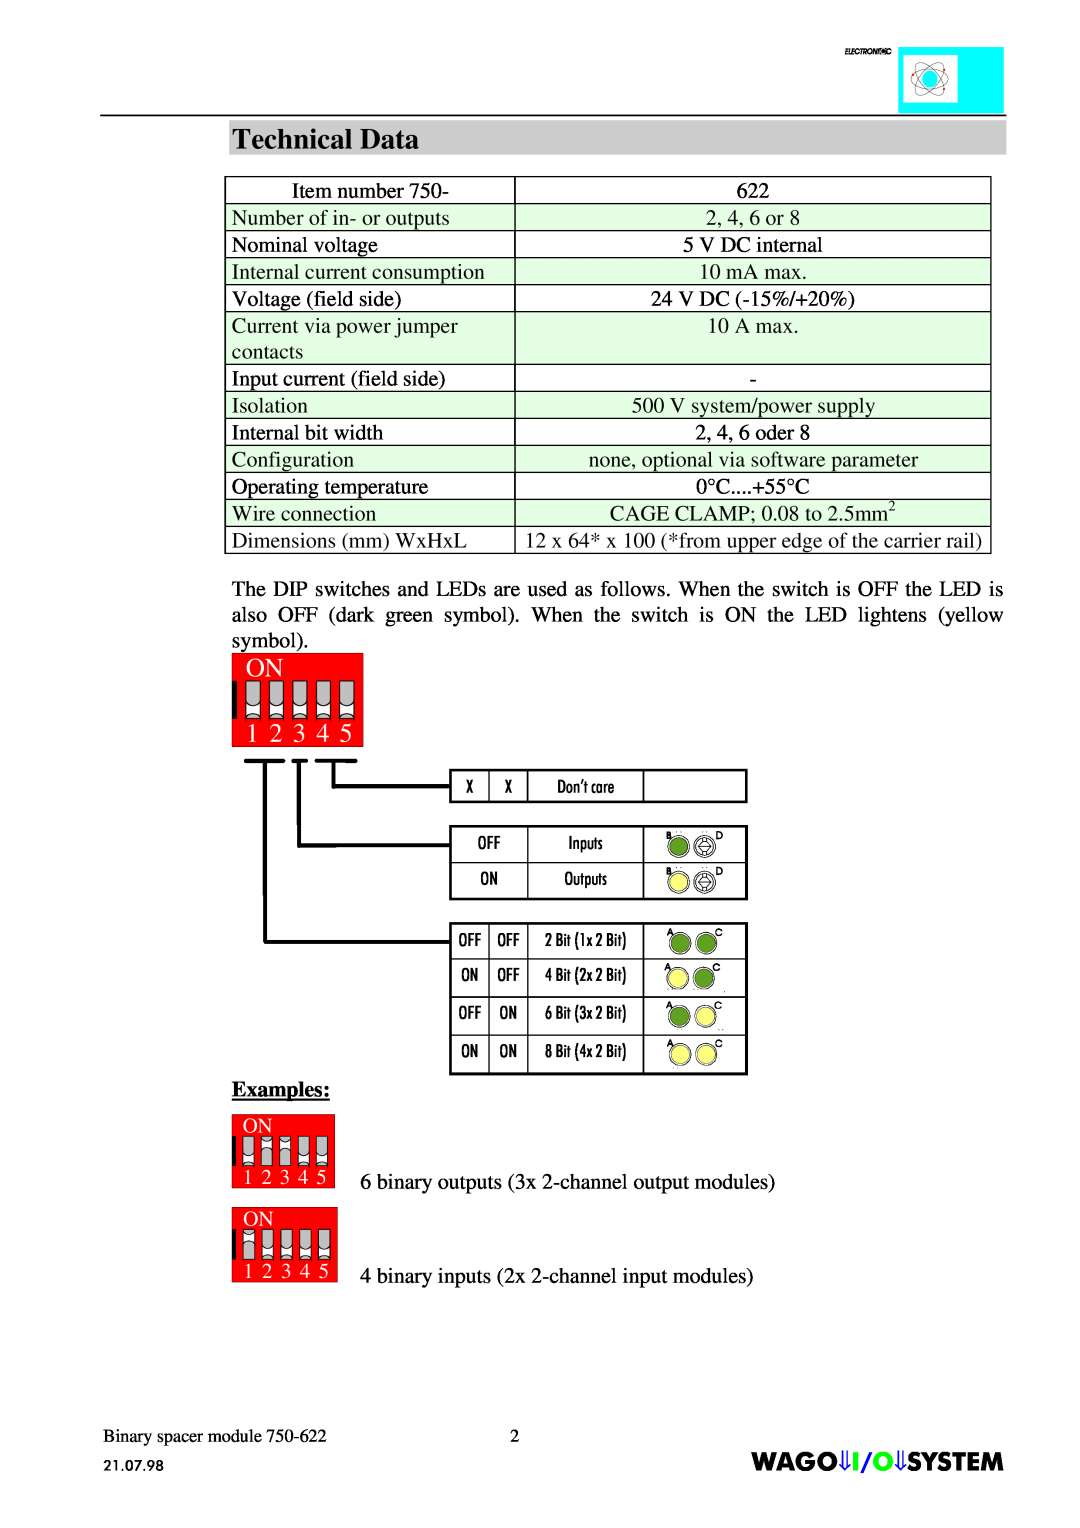 Quatech INTERBUS S manual Technical Data, $*2,26670, Examples, ON 1 2 3 4 